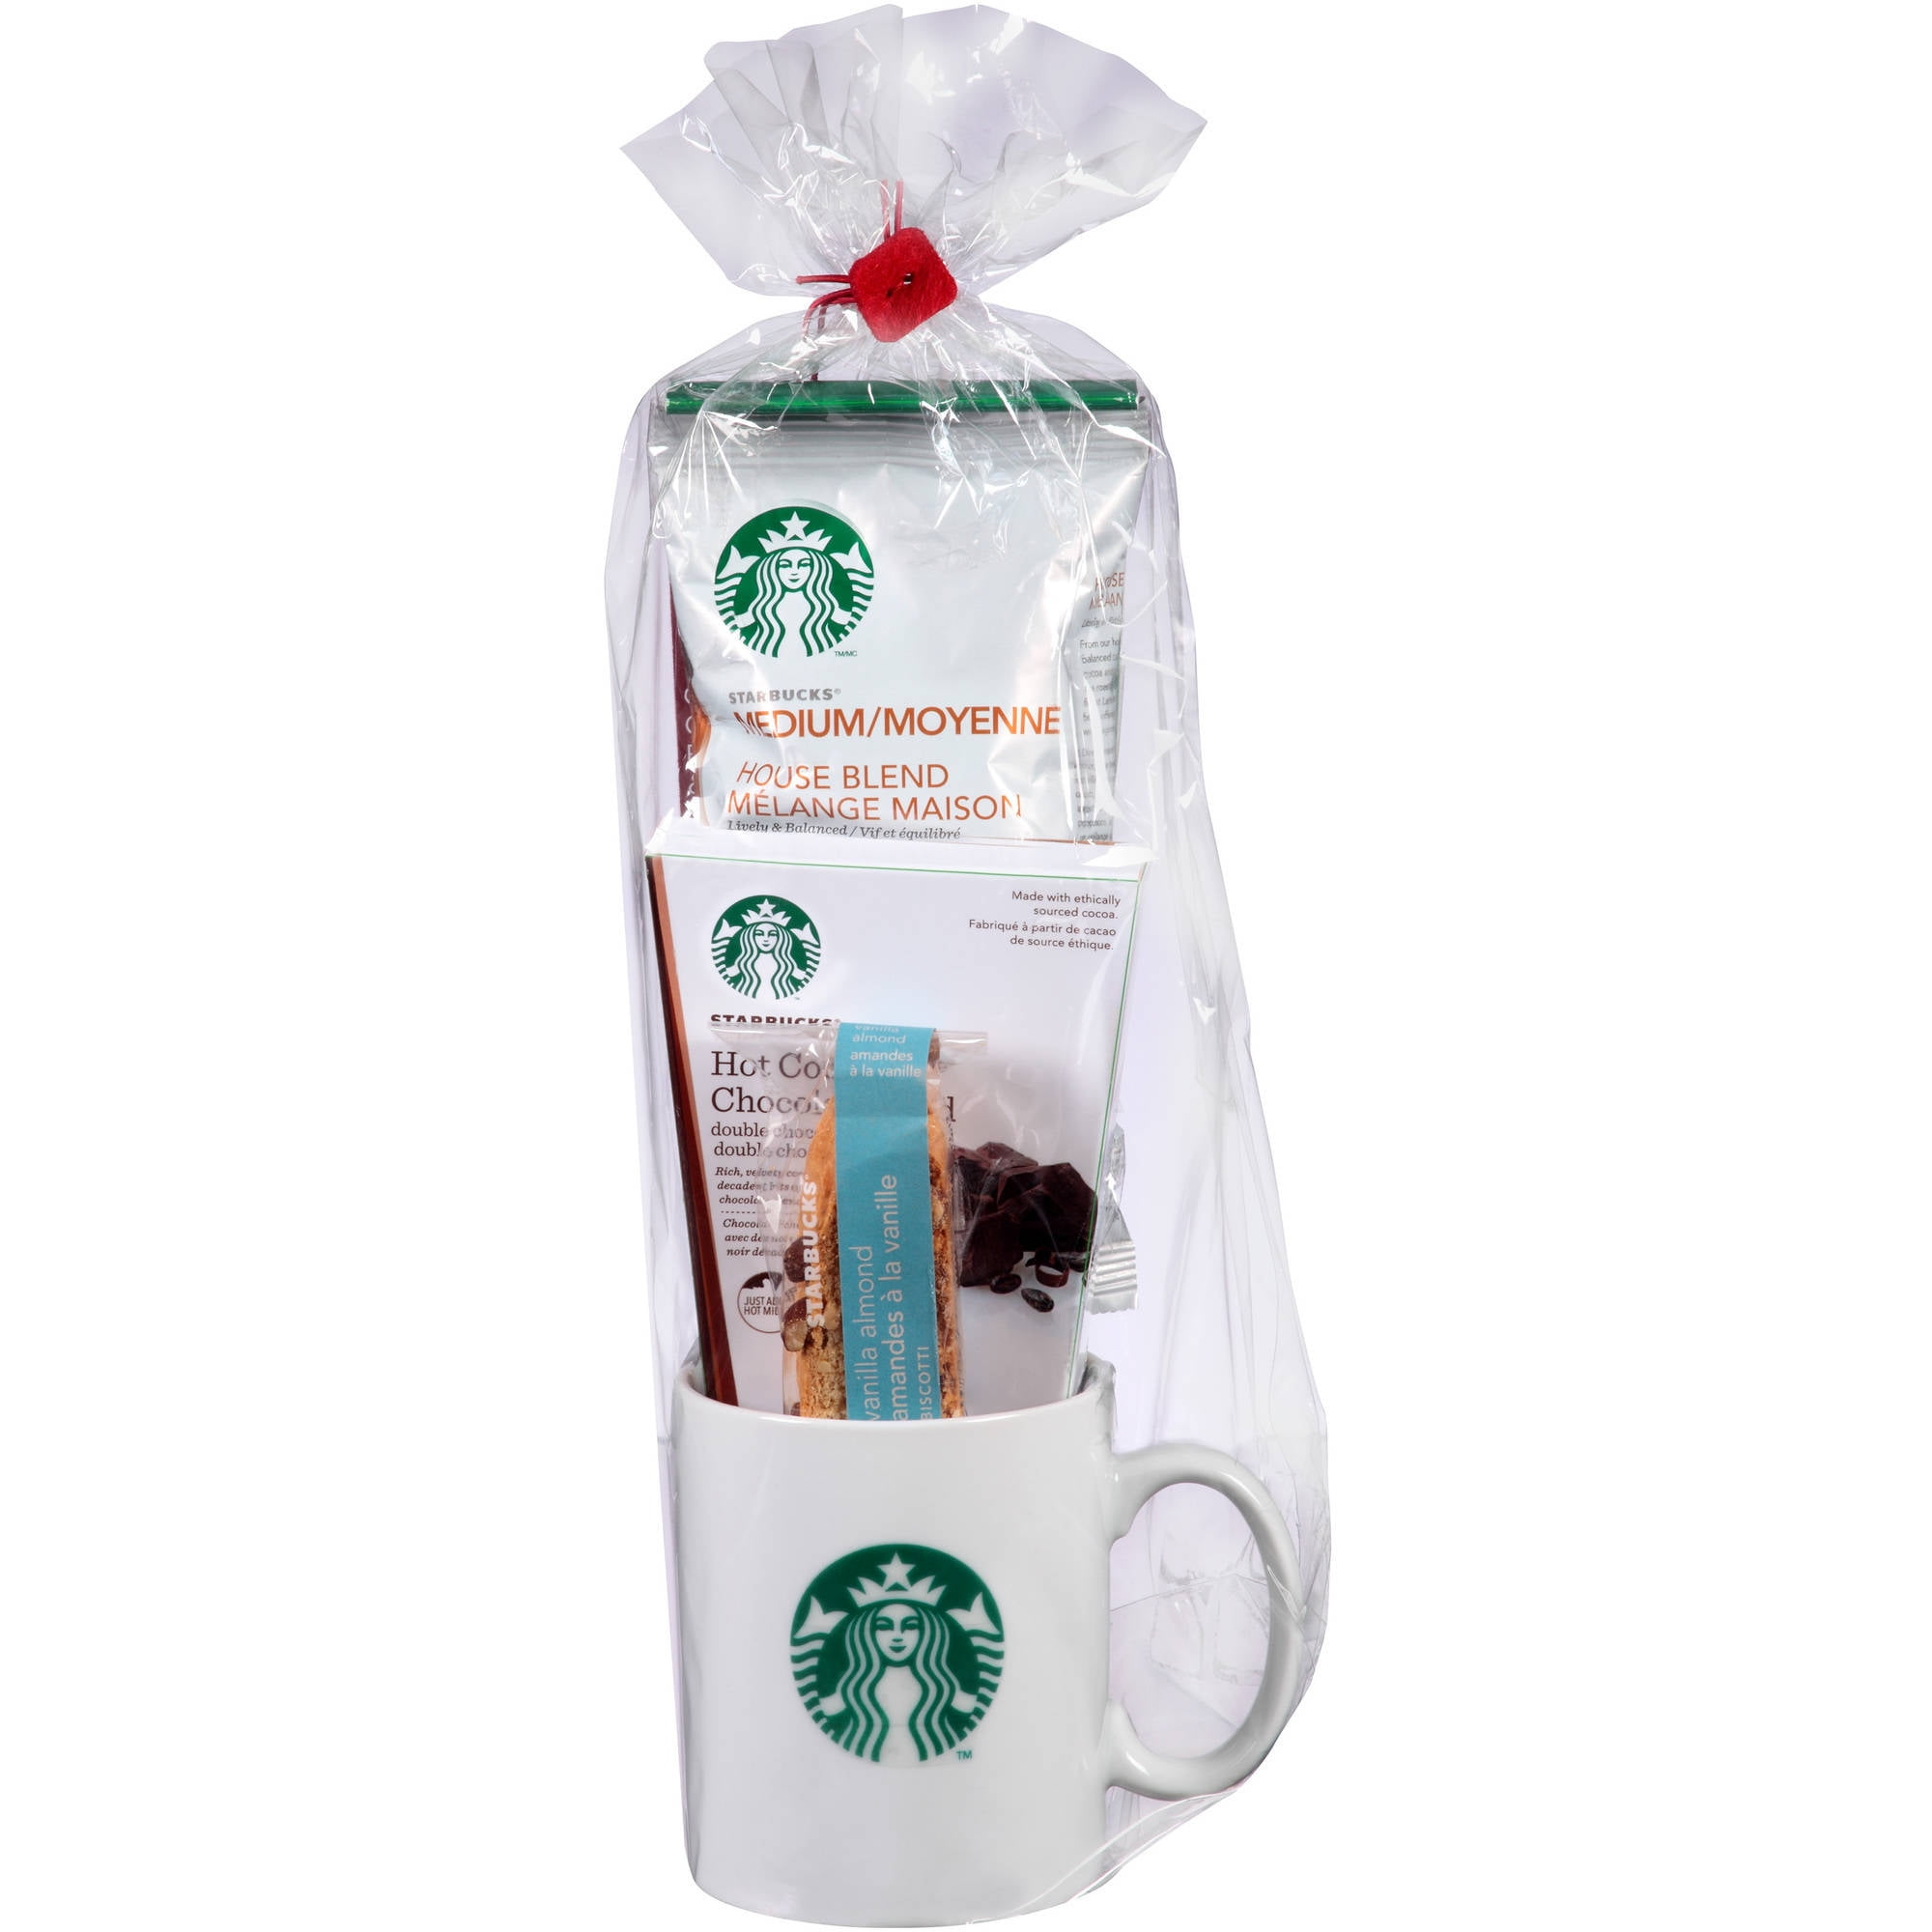 Starbucks Coffee Mug with Hot Cocoa, Coffee & Biscotti Gift Set, 4 Piece 